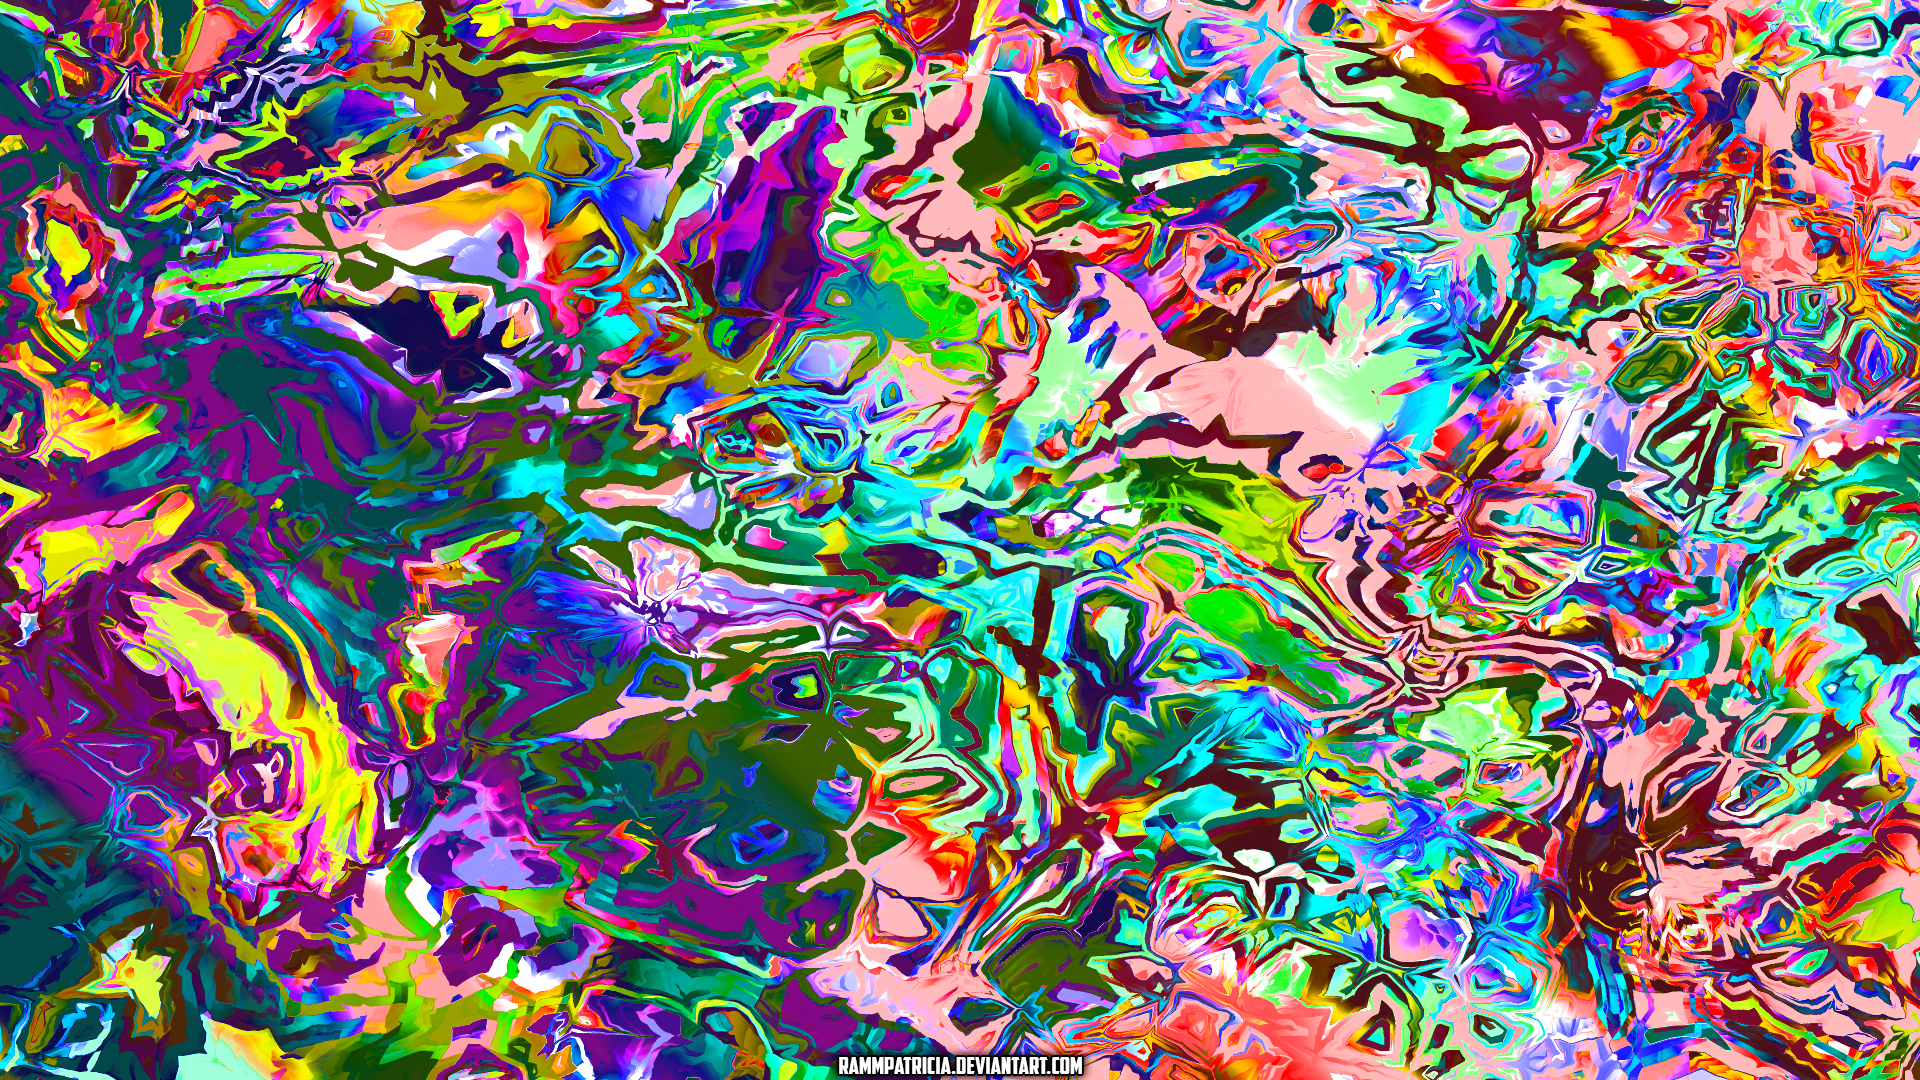 Digital Digital Art RammPatricia Iridescent Colorful 1920x1080